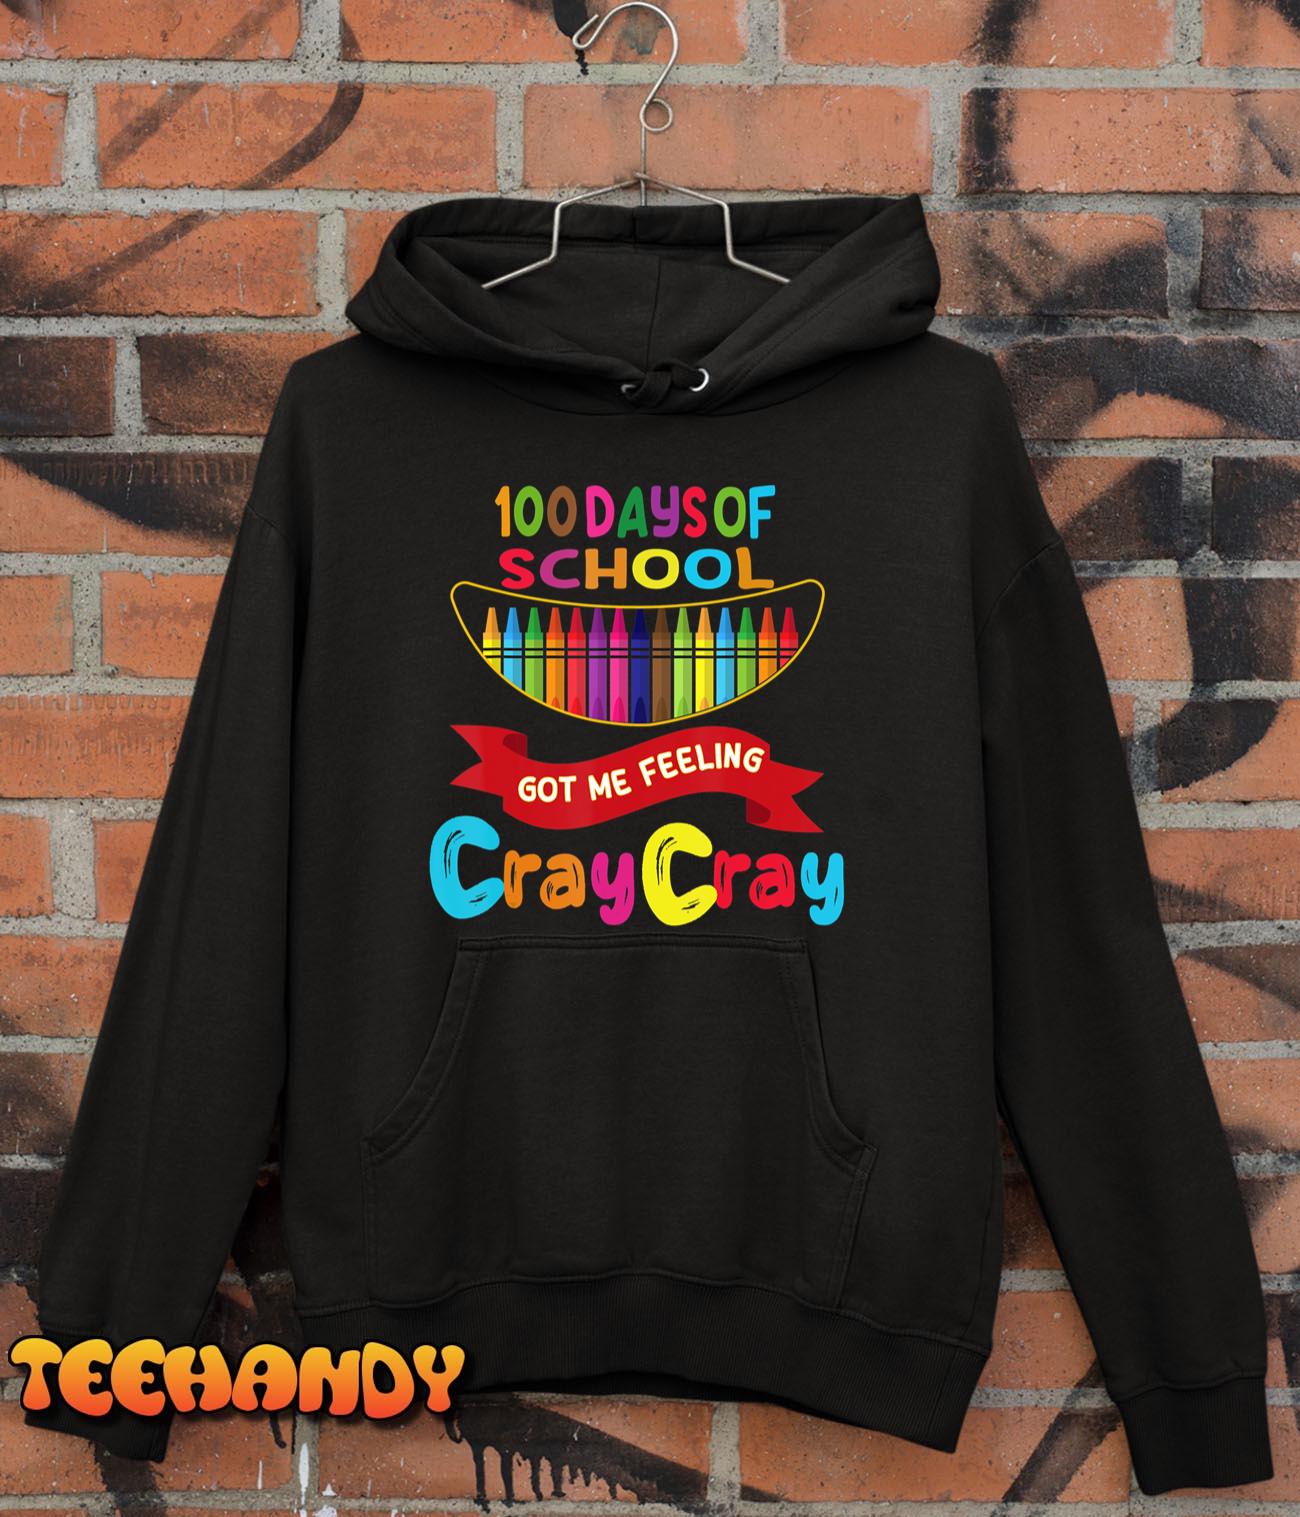 100 Days Of School Got Me Feeling Cray Cray T-Shirt